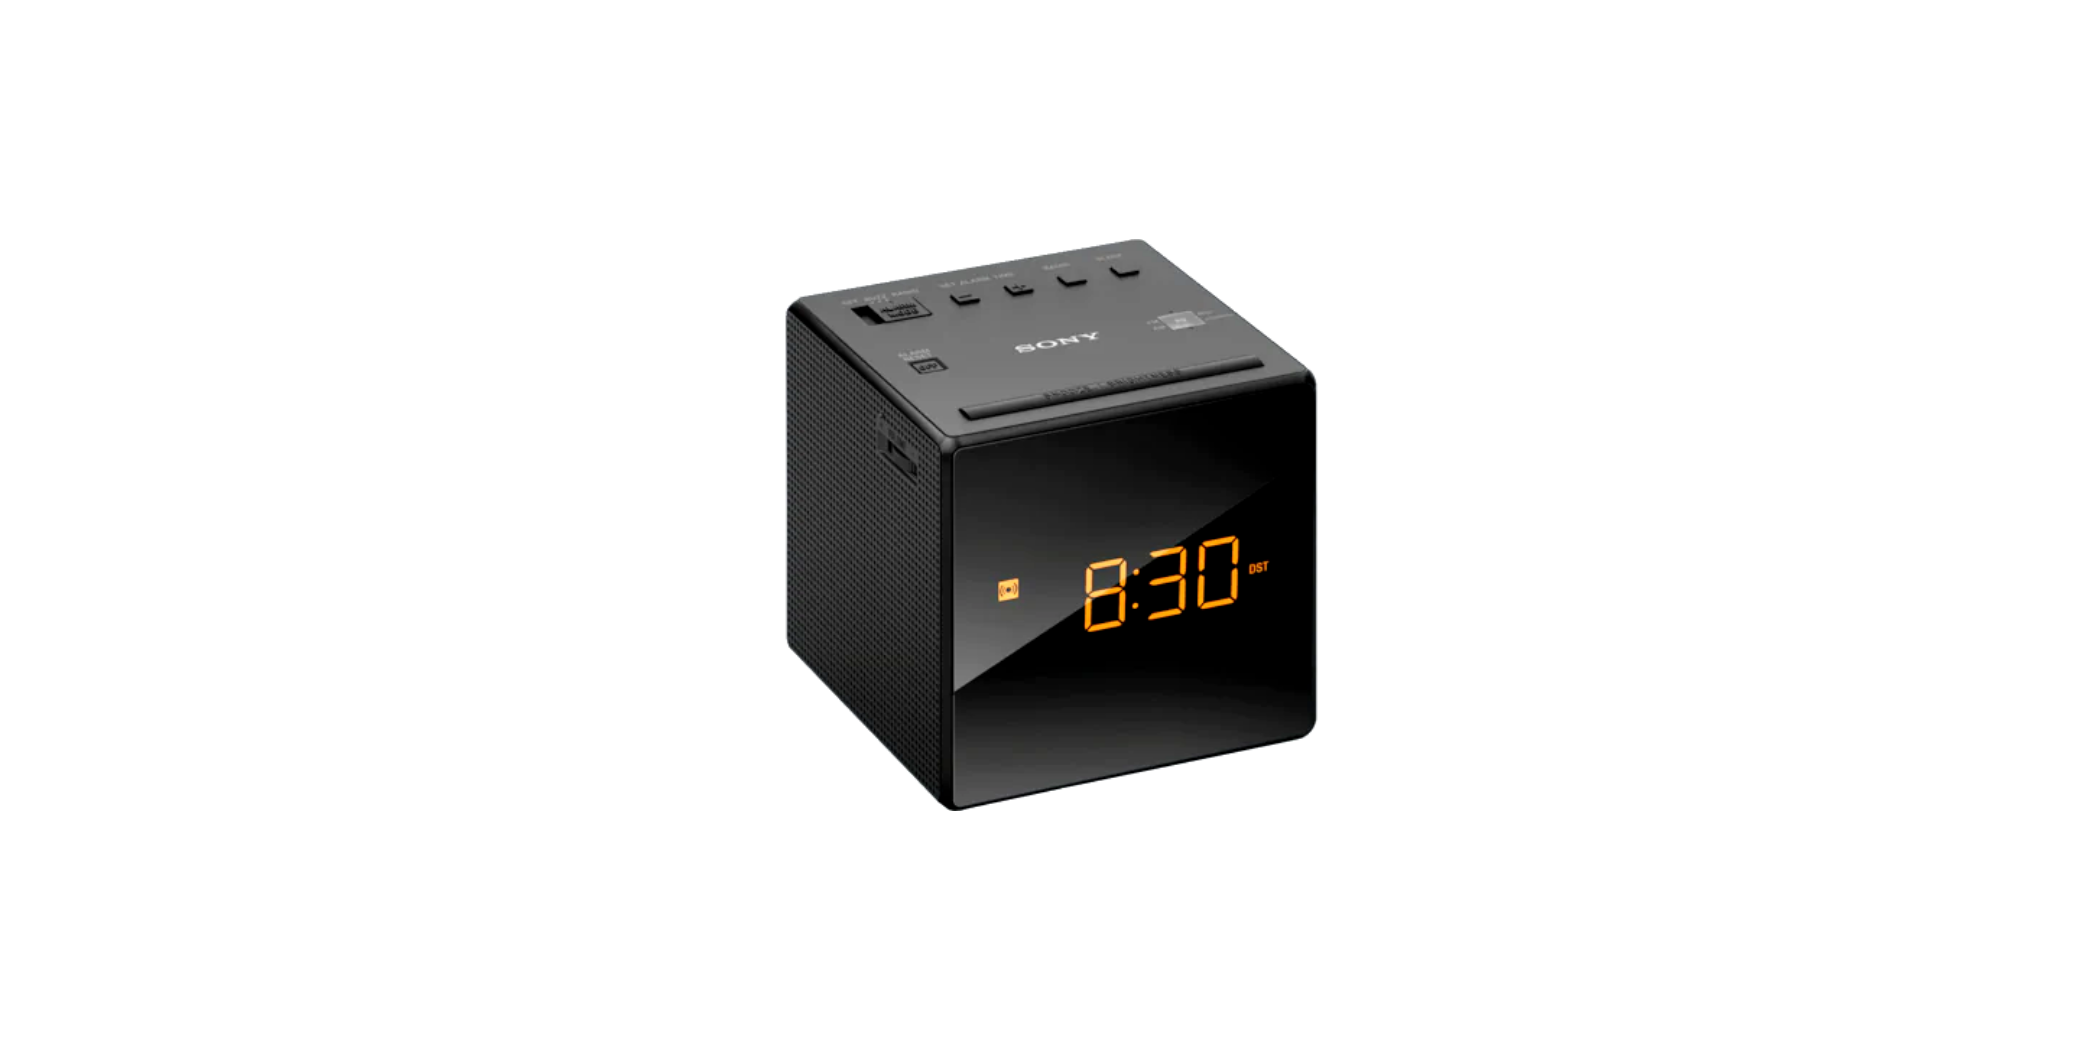 Sony ICF-C1 Radio Clock